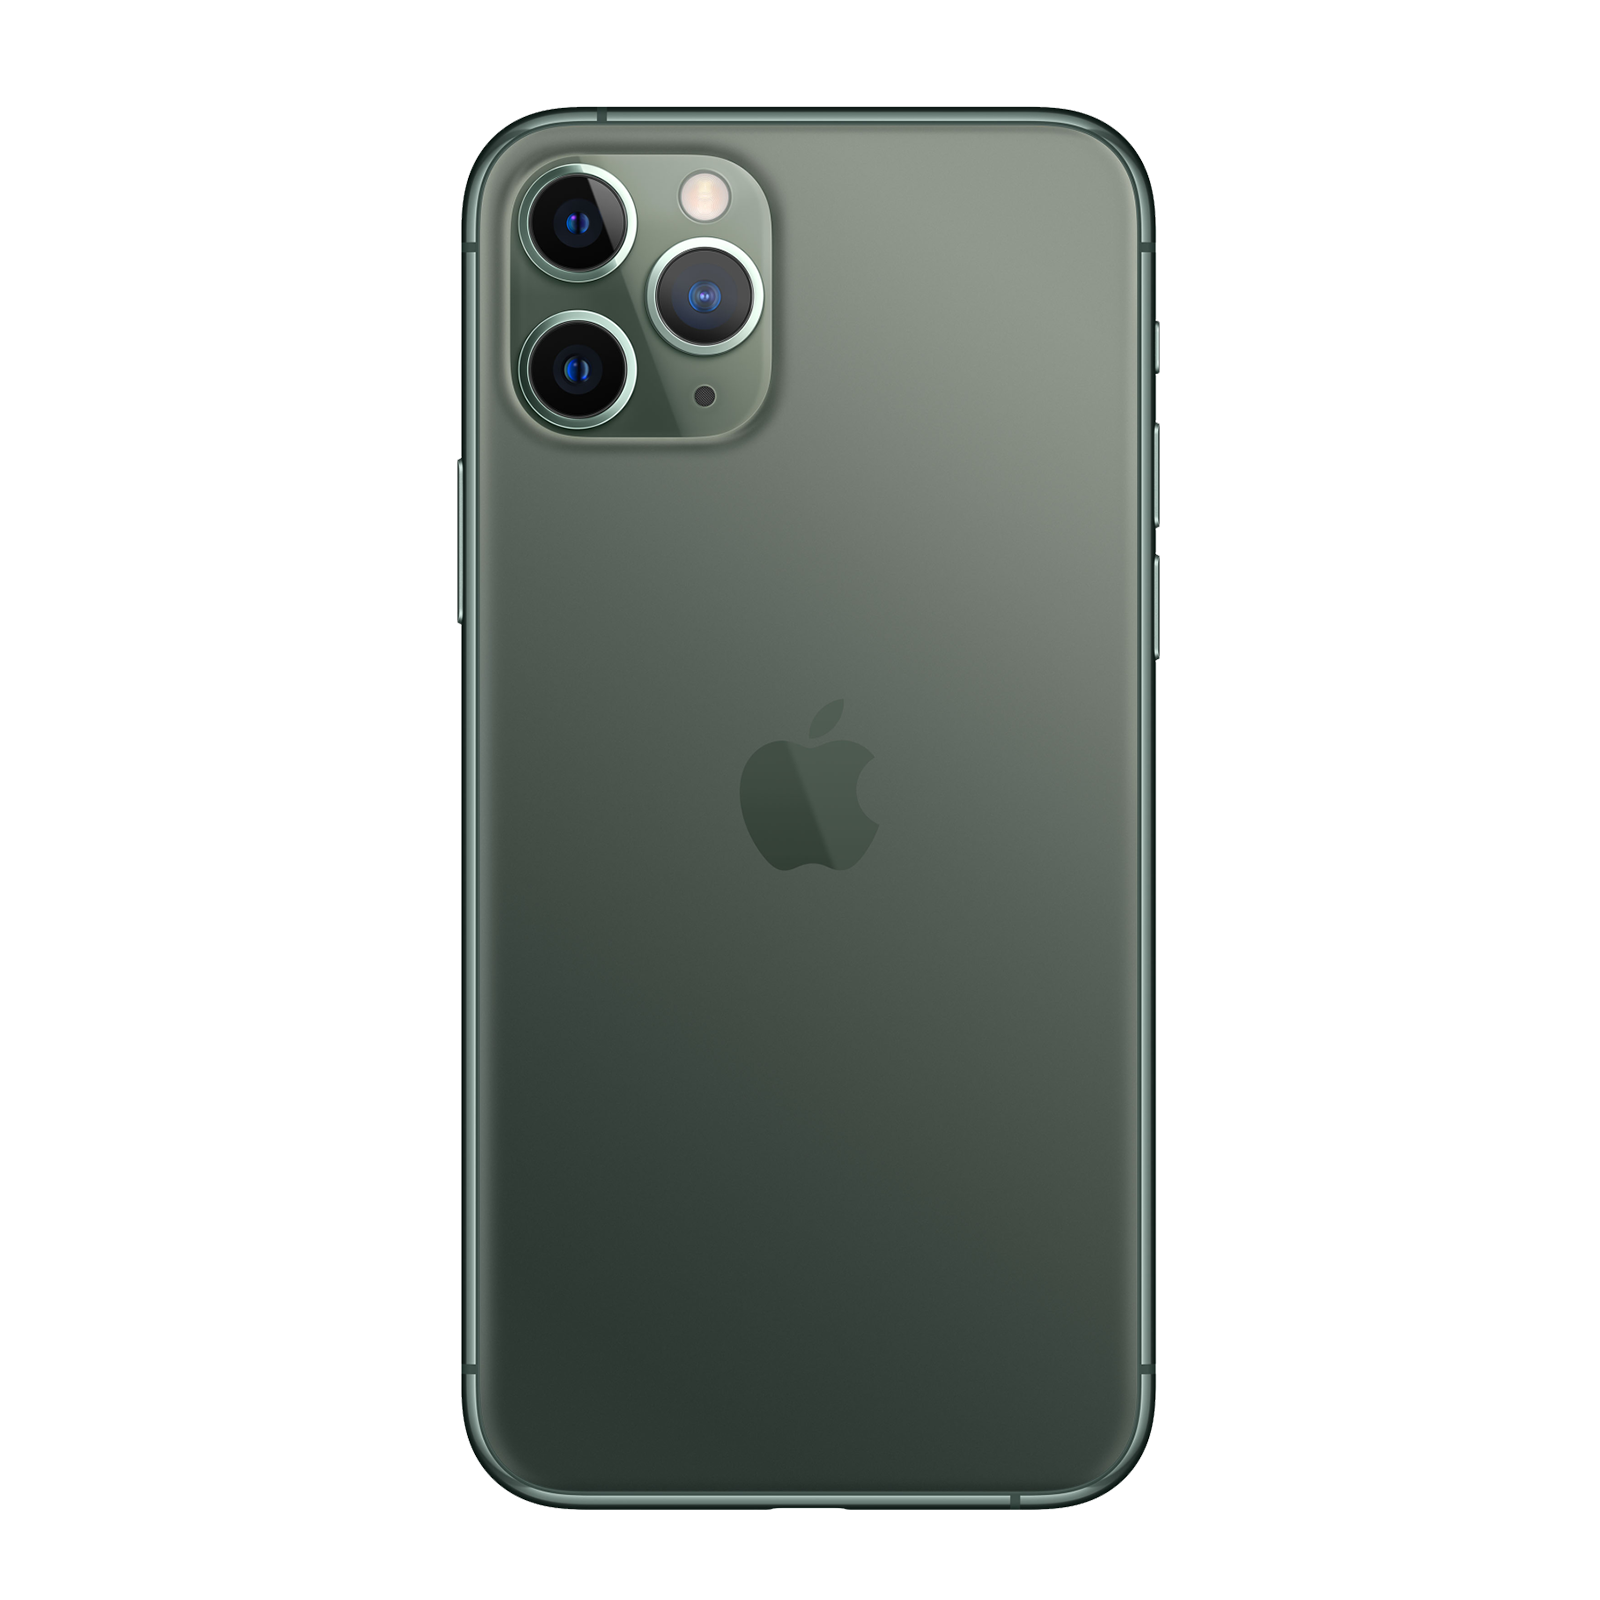 Apple iPhone 11 Pro Max 256GB Midnight Green Pristine - Unlocked